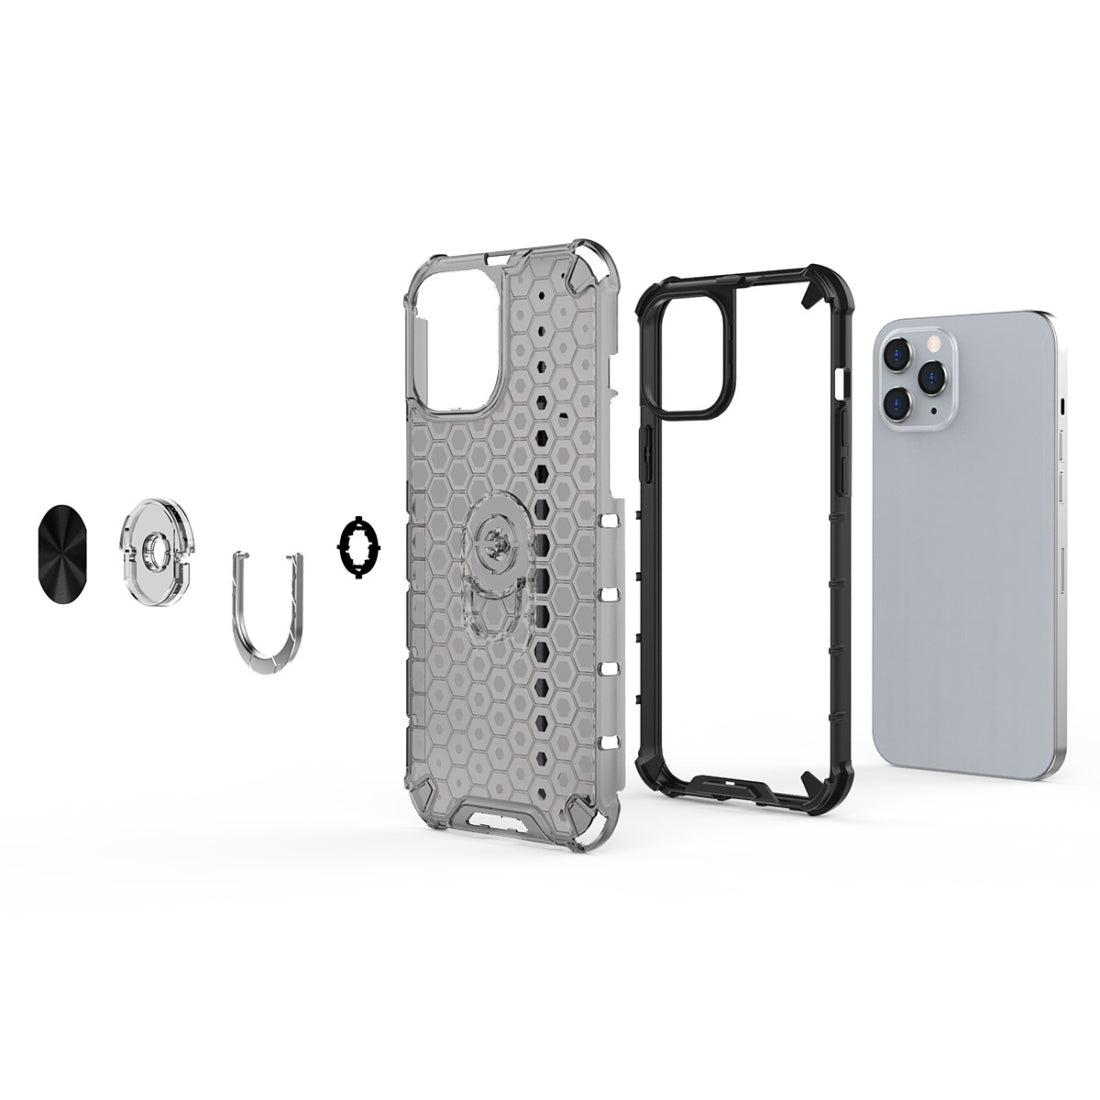 AMZER Honeycomb SlimGrip Hybrid Case with Holder for iPhone 12 mini